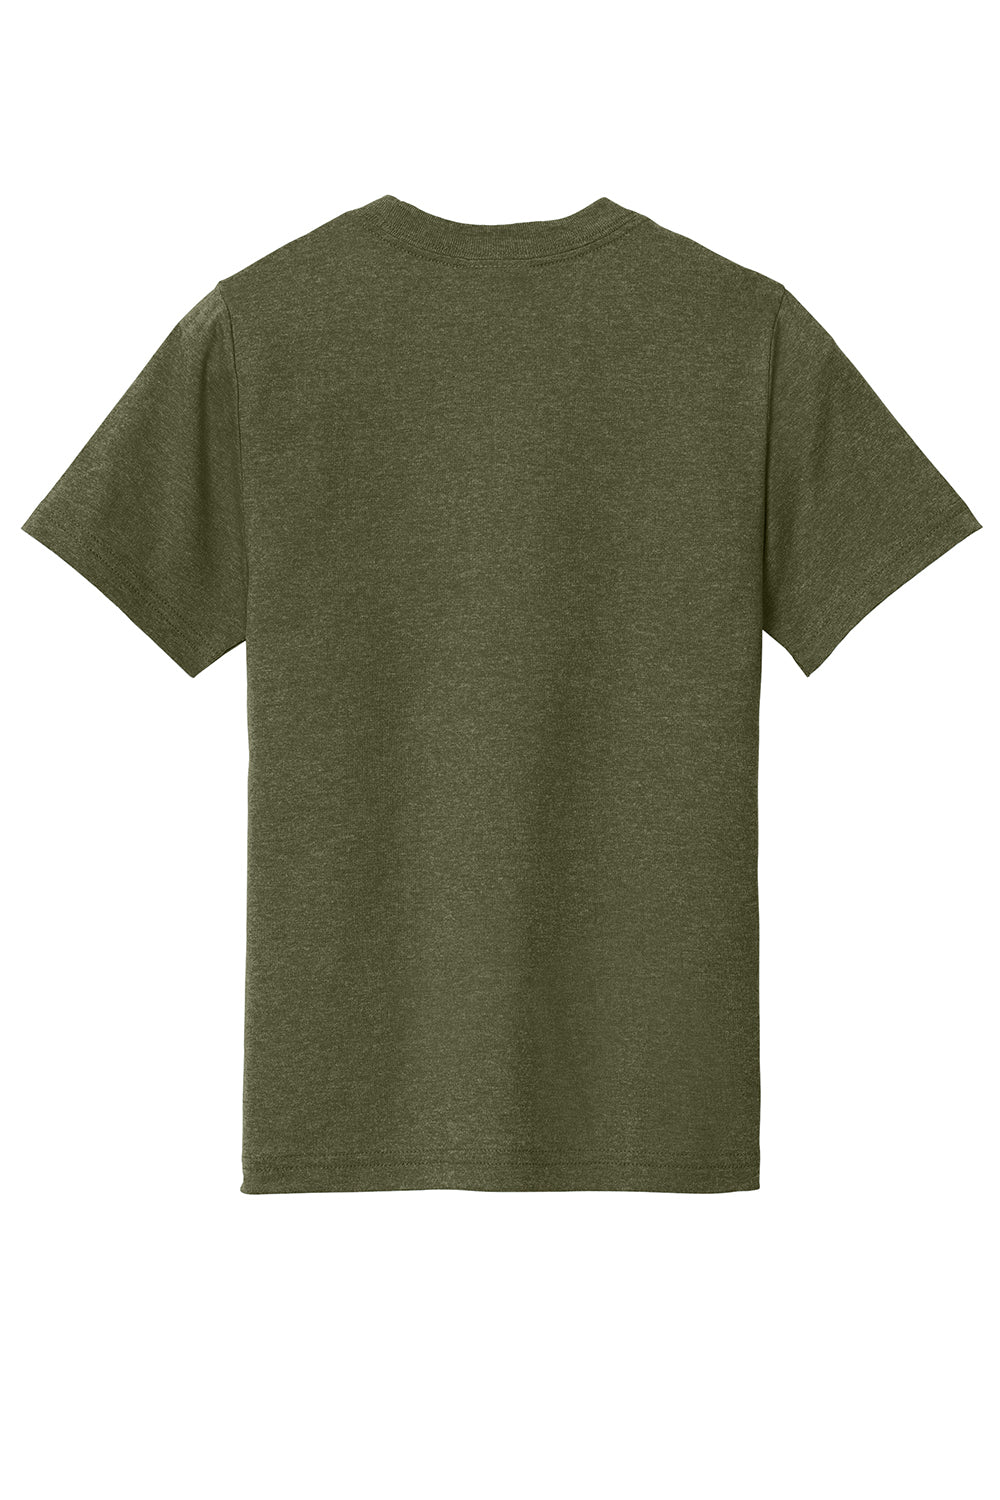 Port & Company PC330Y Youth Short Sleeve Crewneck T-Shirt Heather Military Green Flat Back